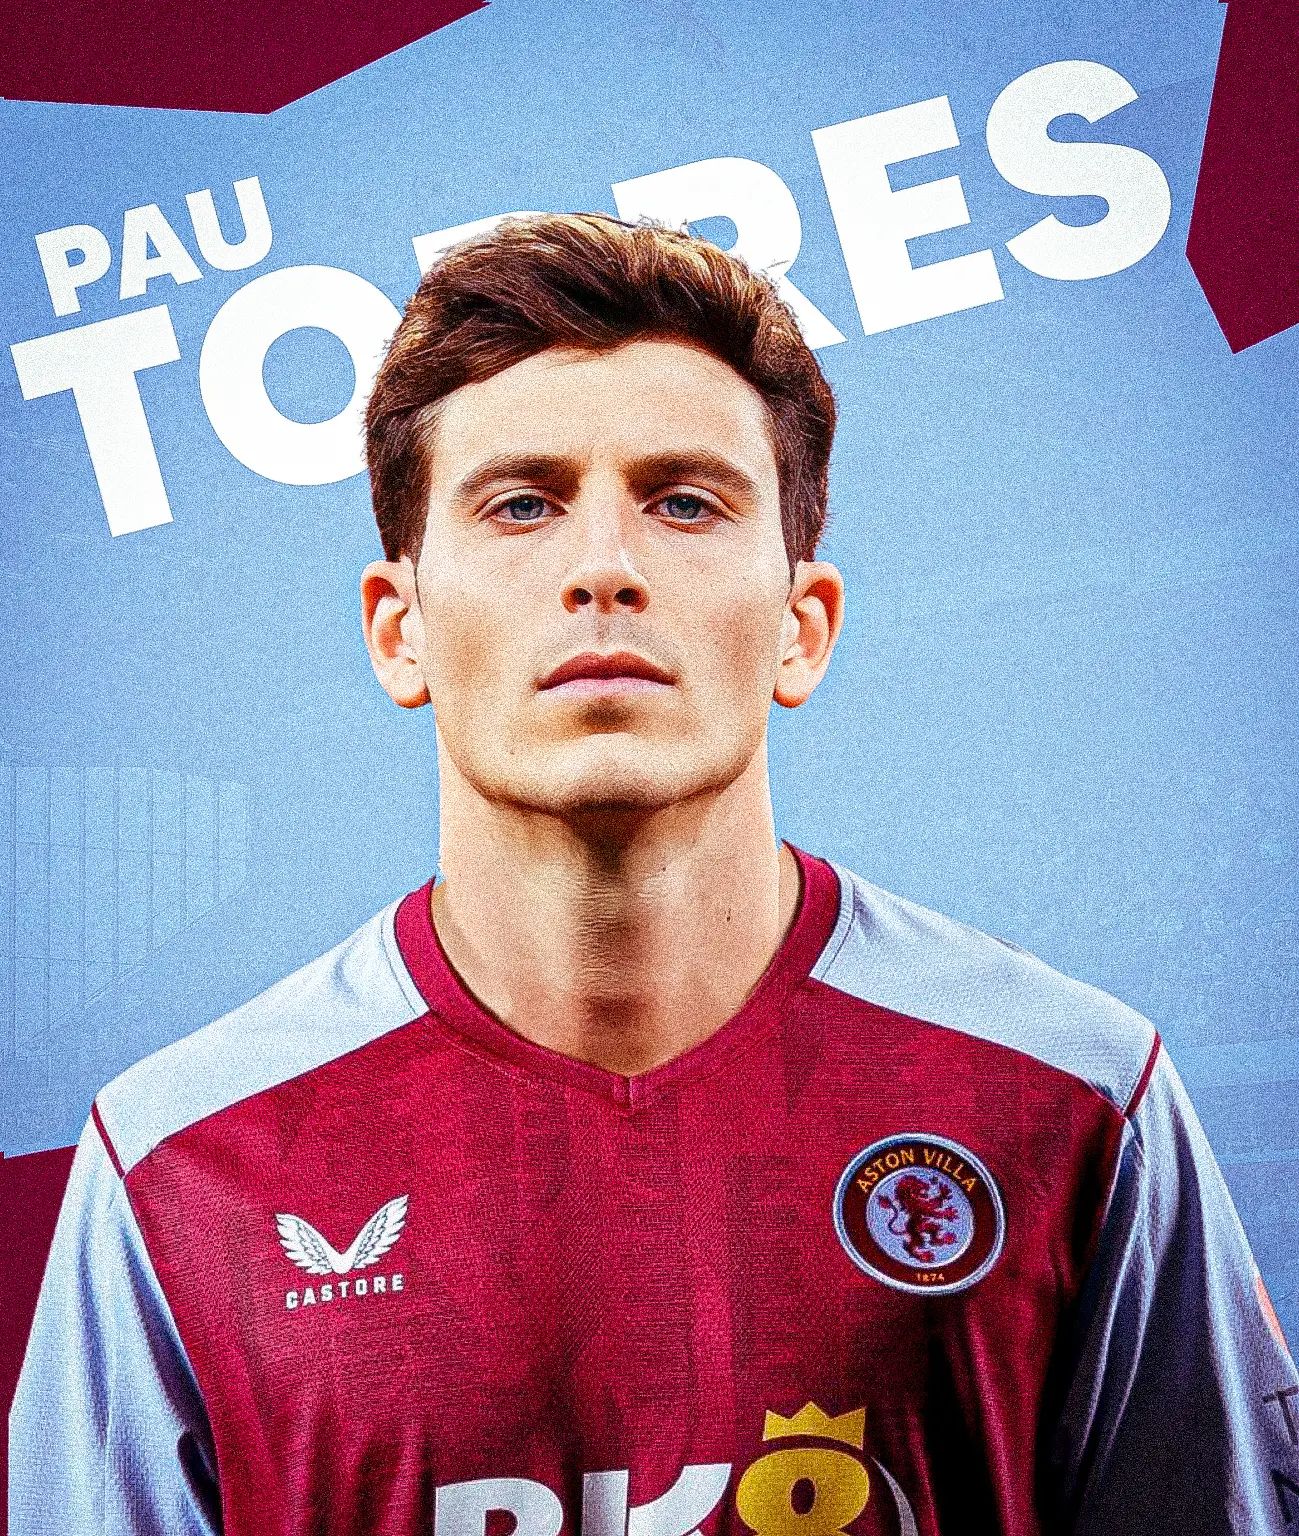 Aston villa confirms Pau Torres from Villarreal.